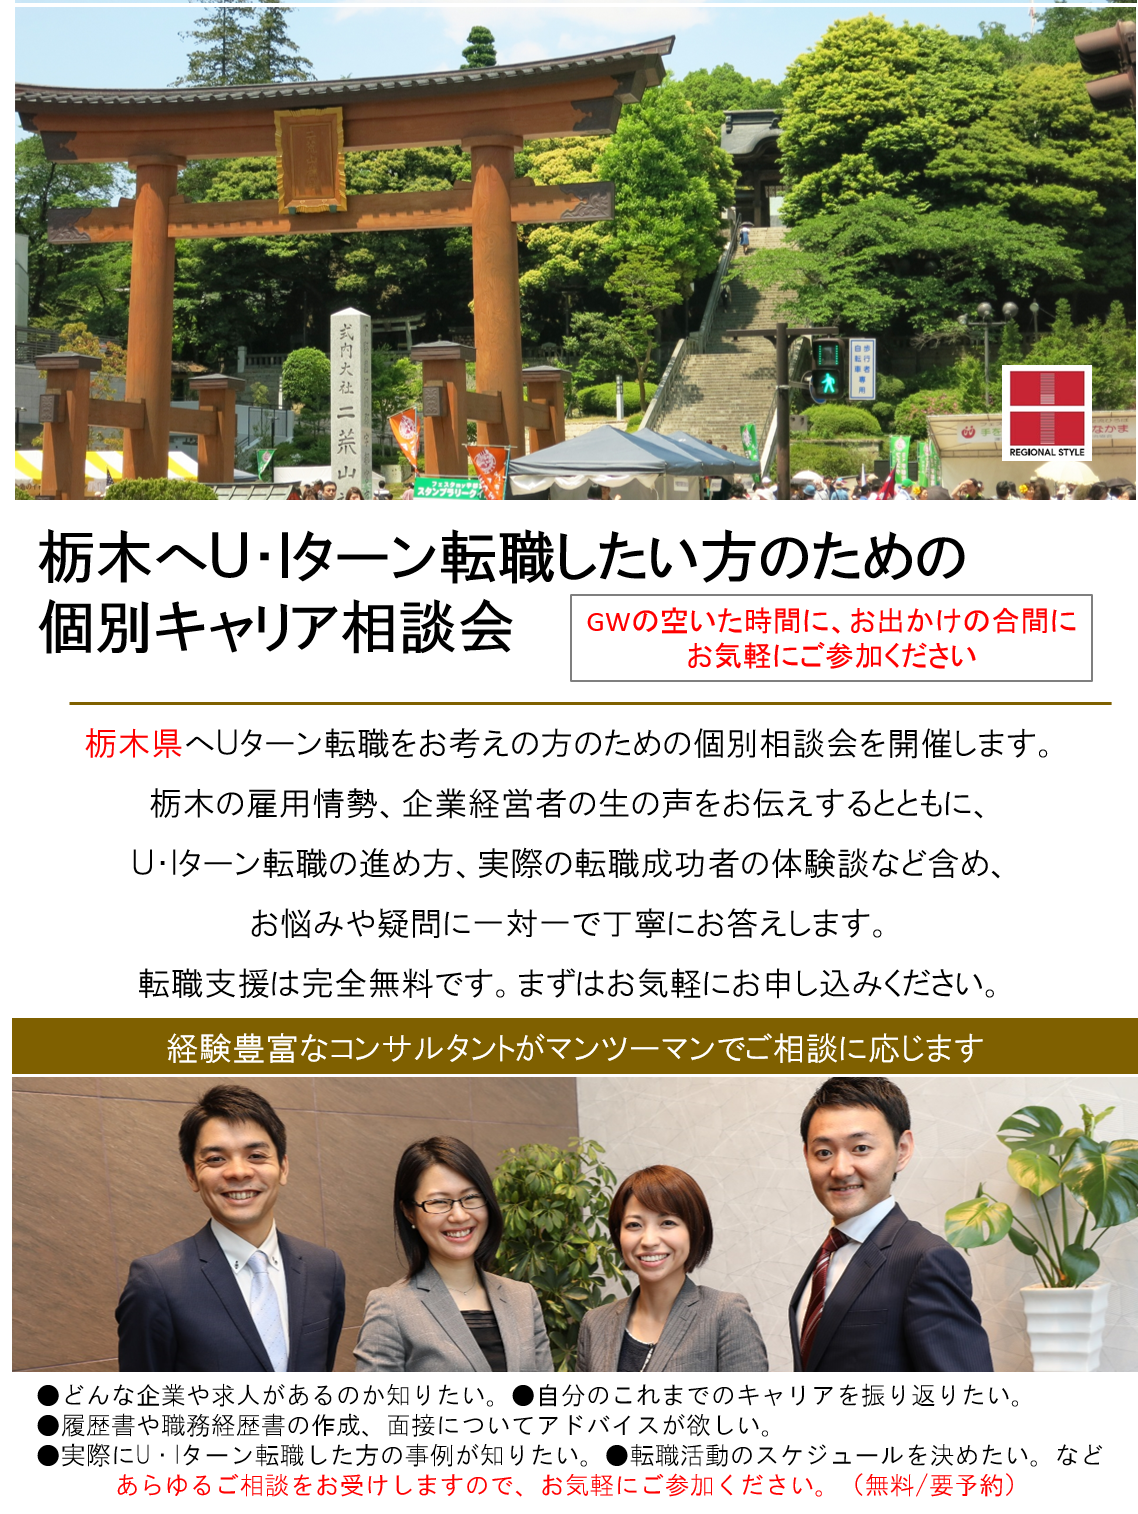 http://www.regional.co.jp/career_mt/2018gwtokyotochigi.png